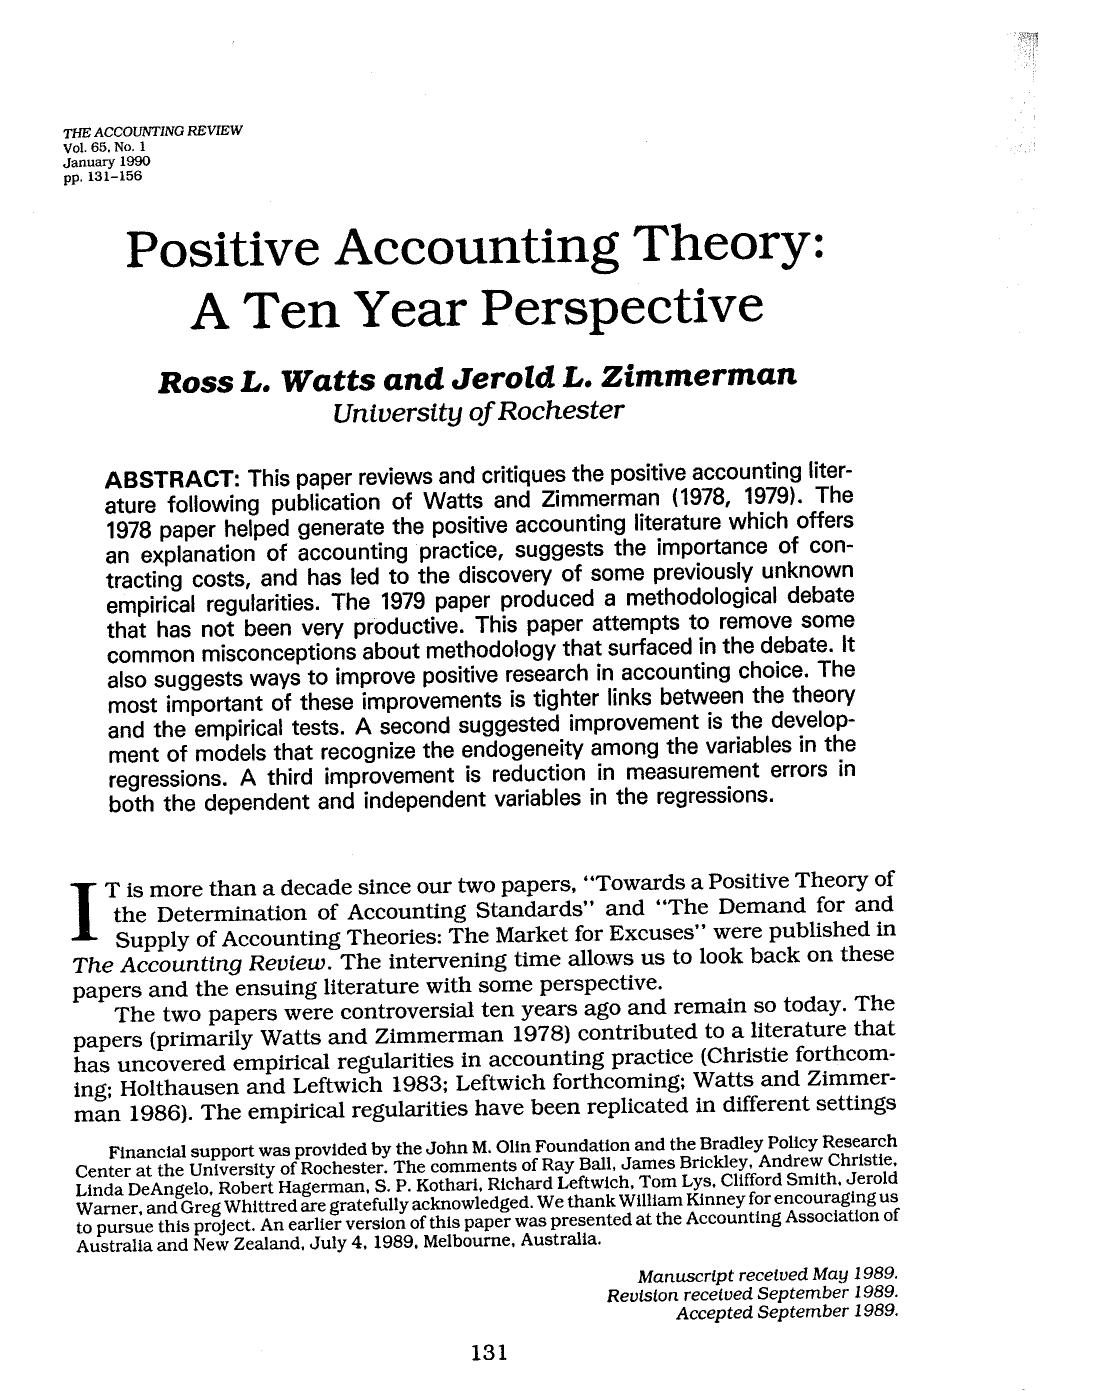 watts & zimmerman positve accounting theory 1990